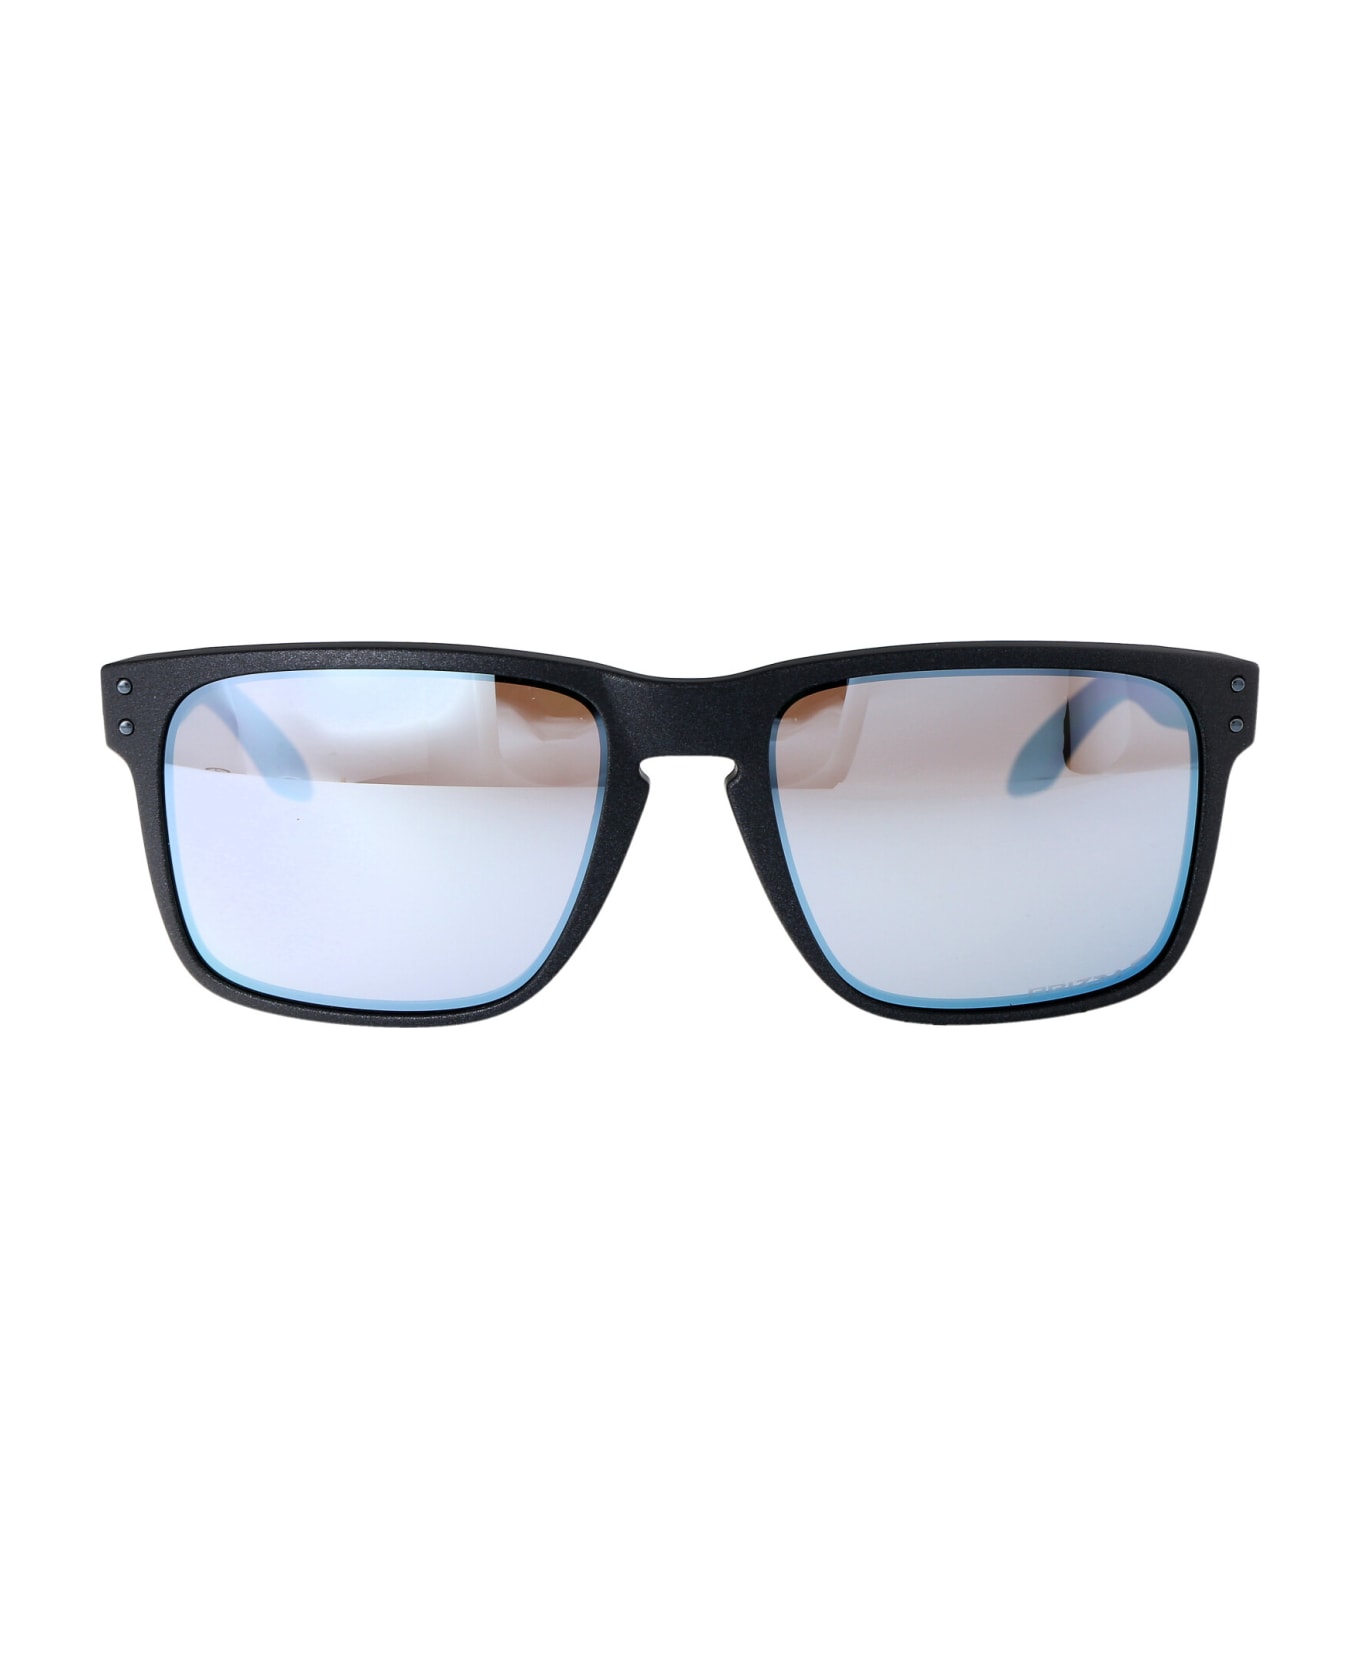 Oakley Holbrook Xl Sunglasses - 941739 Blue Steel